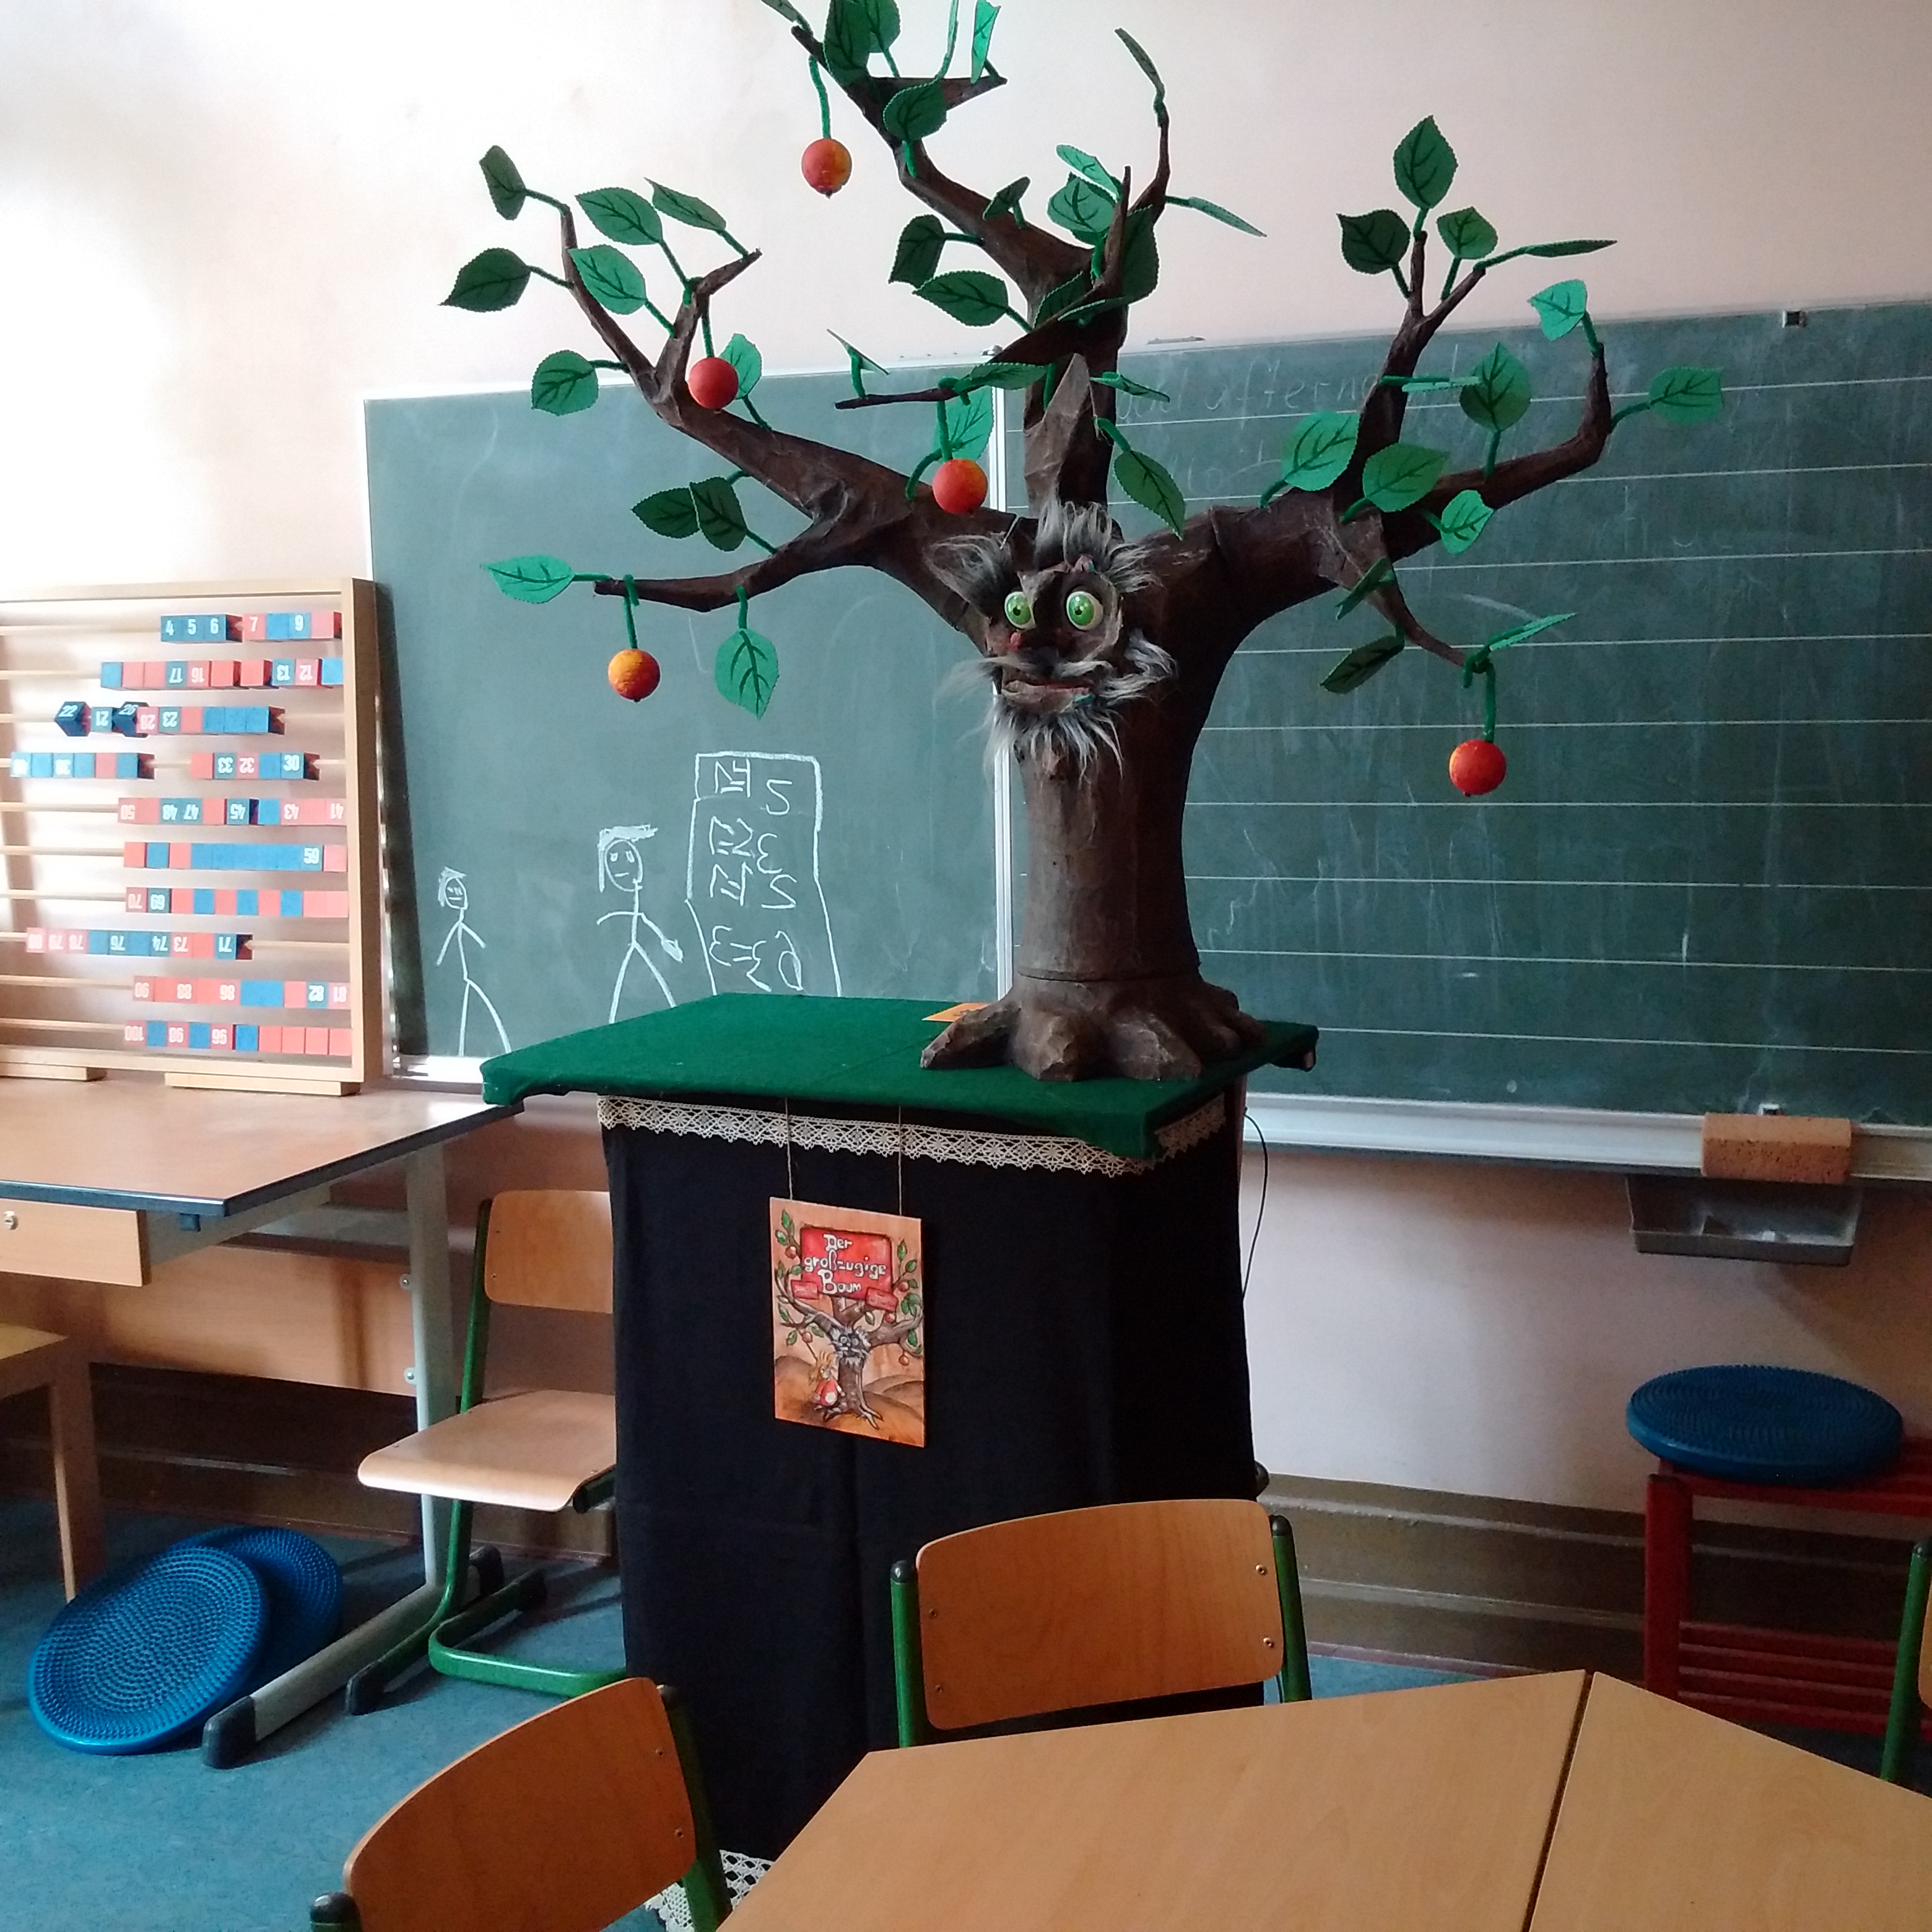 The Giving Tree, puppet, school, arbre, Baum